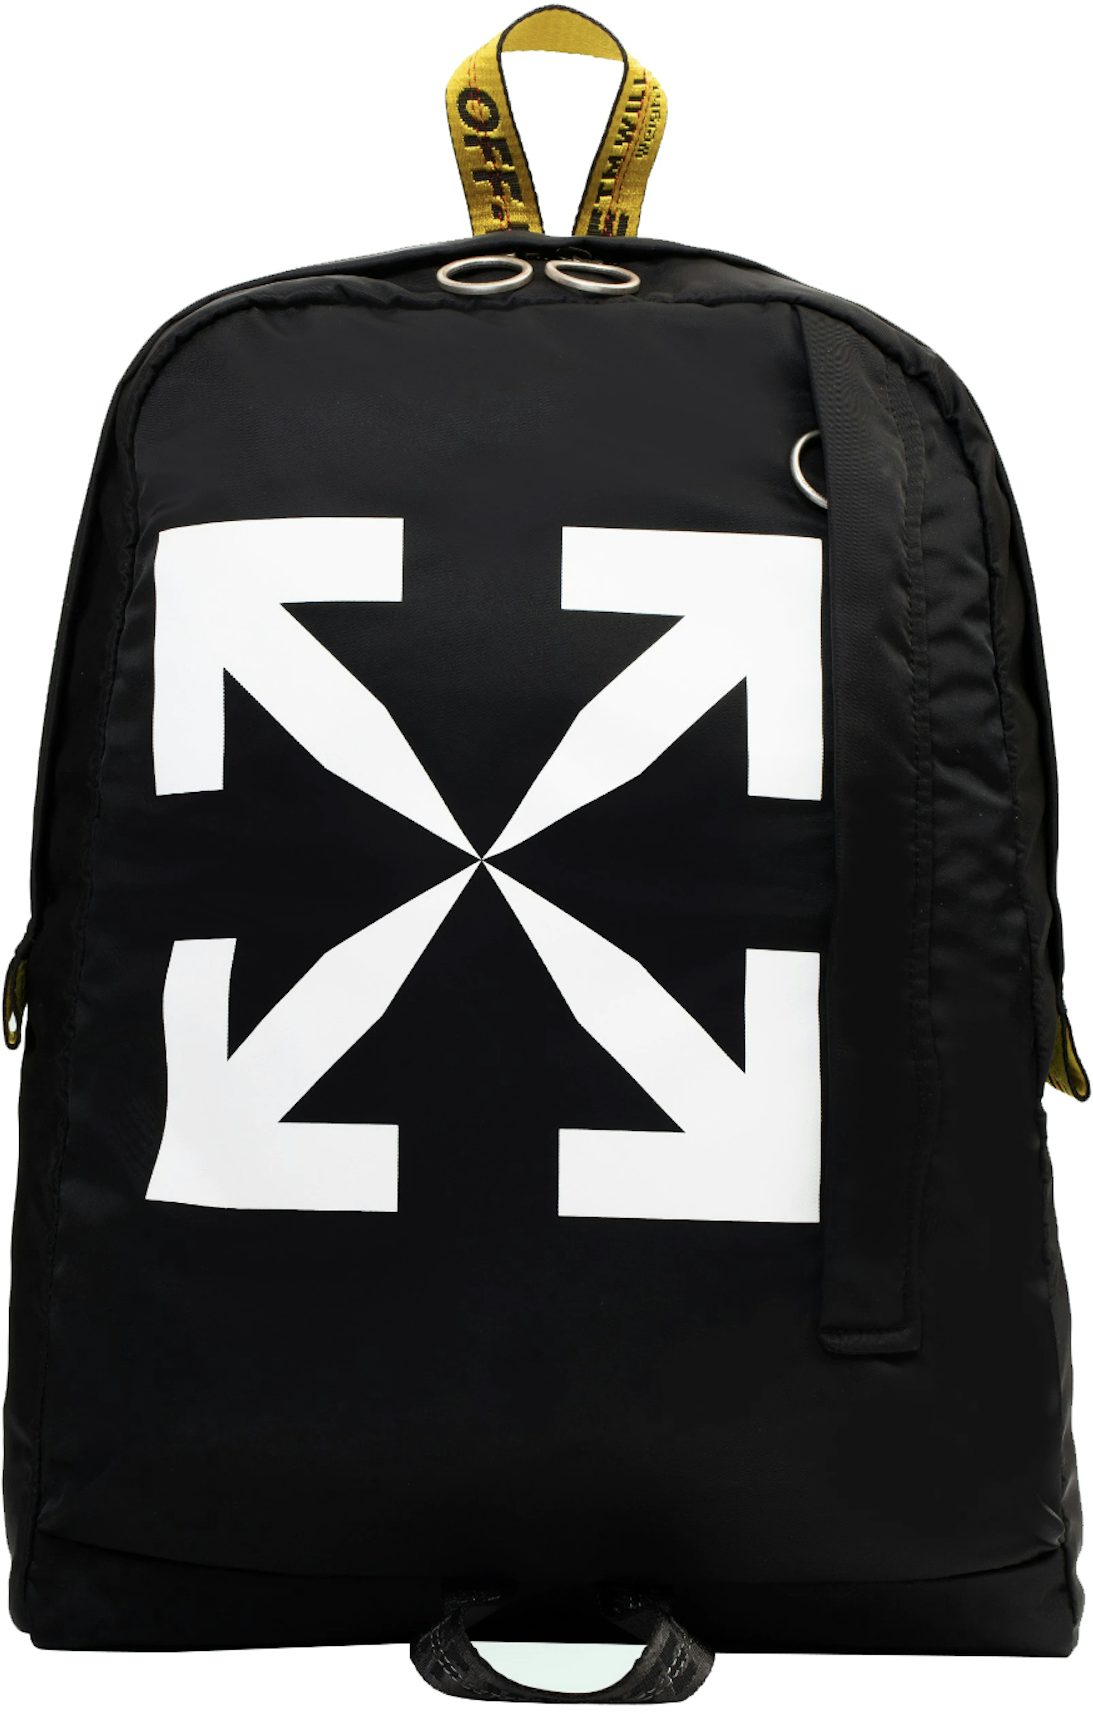 Nike+SB+RPM+Backpack+Unisex+Athletic+Travel+School+Bag+Golden+Moss